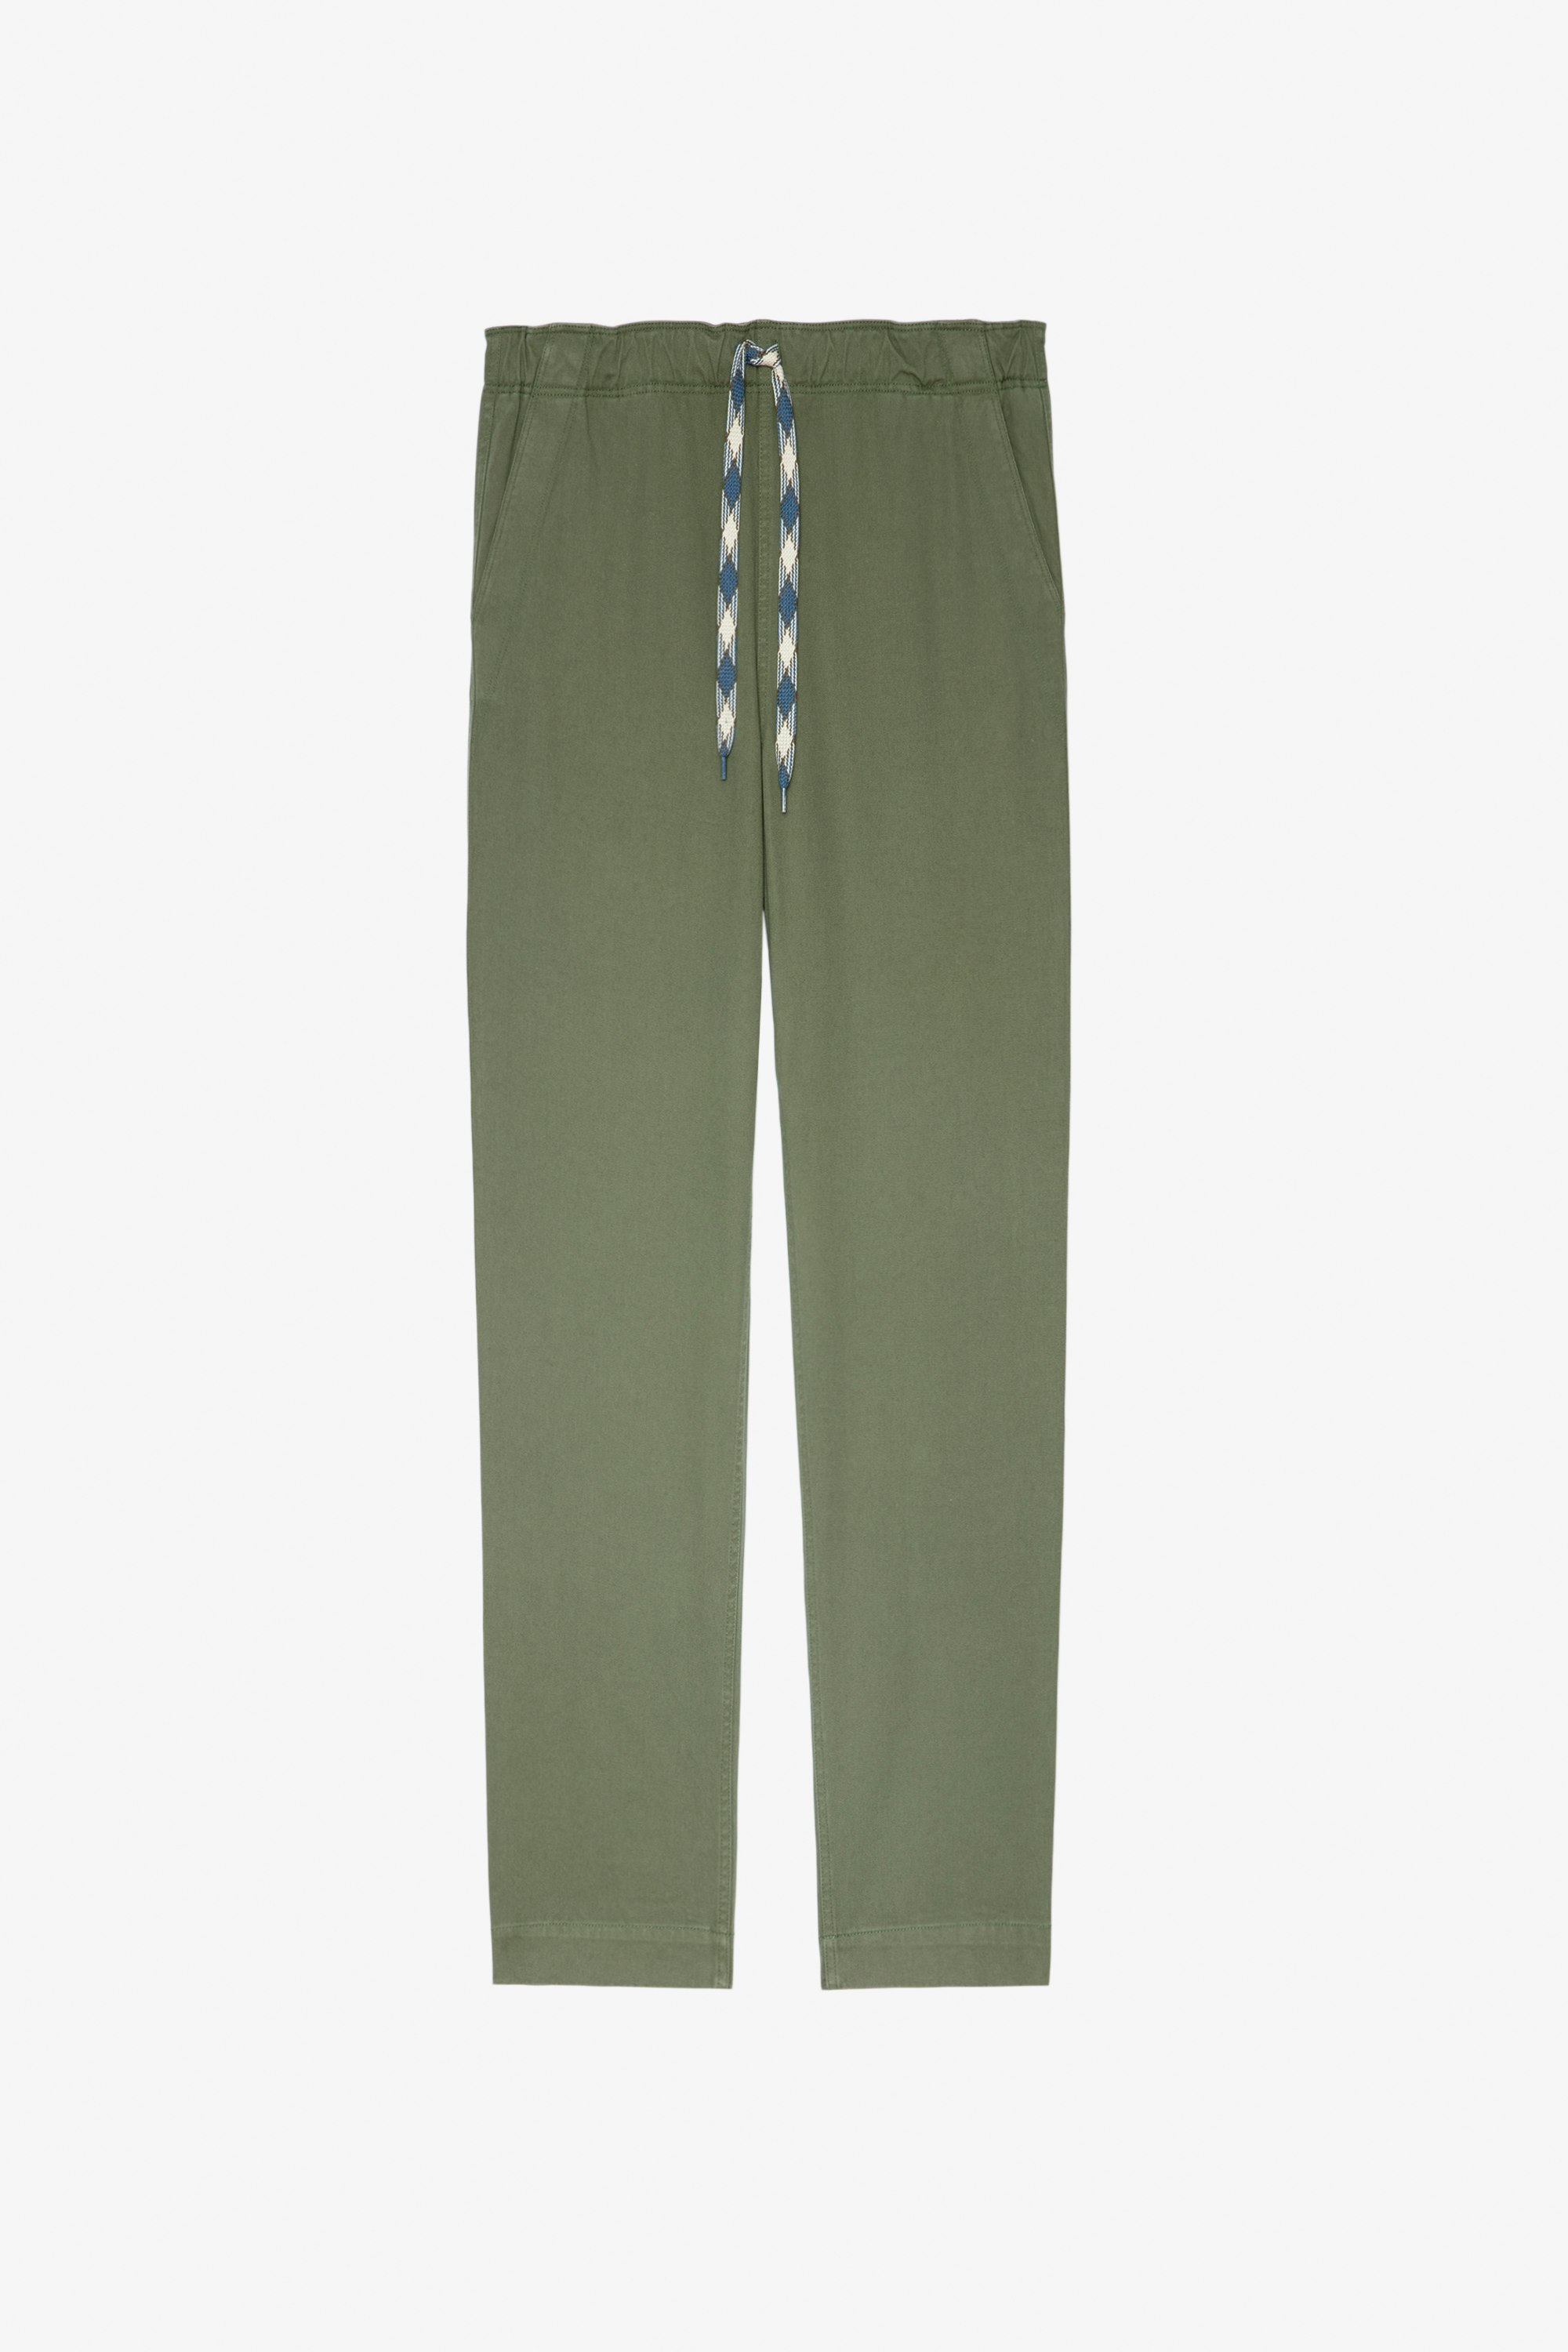 Pantalón Pixel Lino Pantalón militar de algodón de lino color caqui con cordón en contraste Hombre